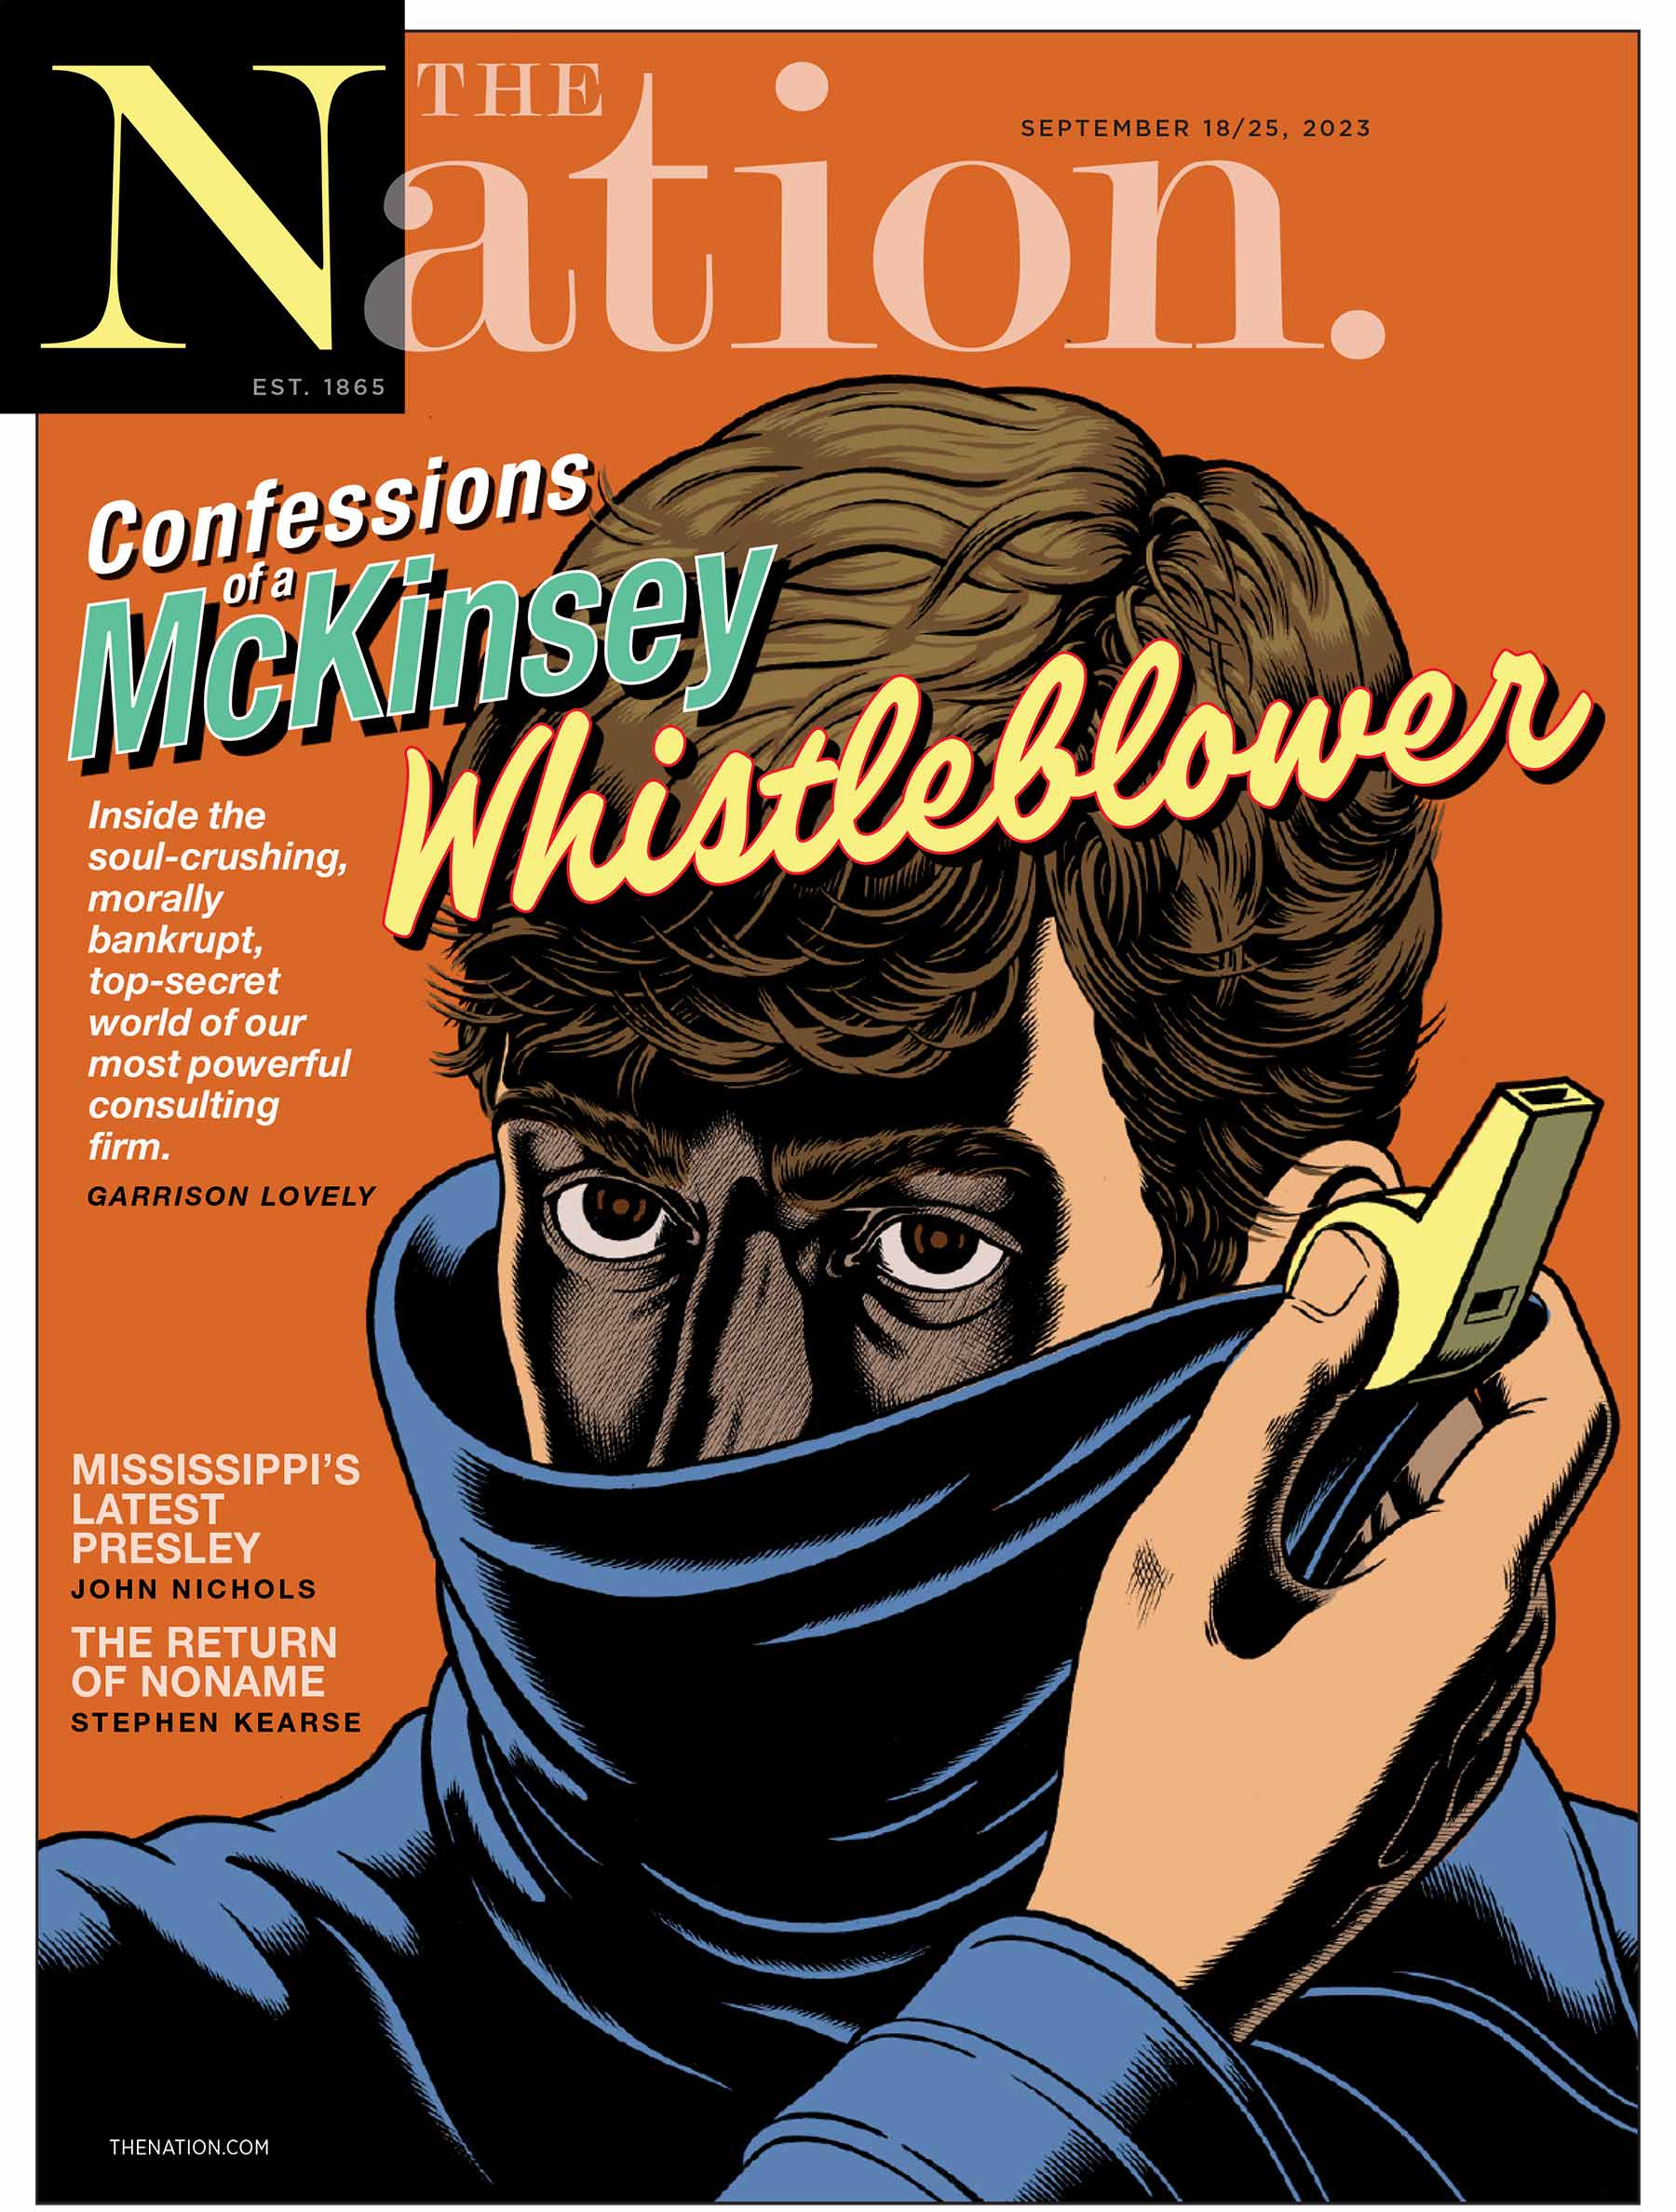 Cover of September 18/25, 2023, Issue